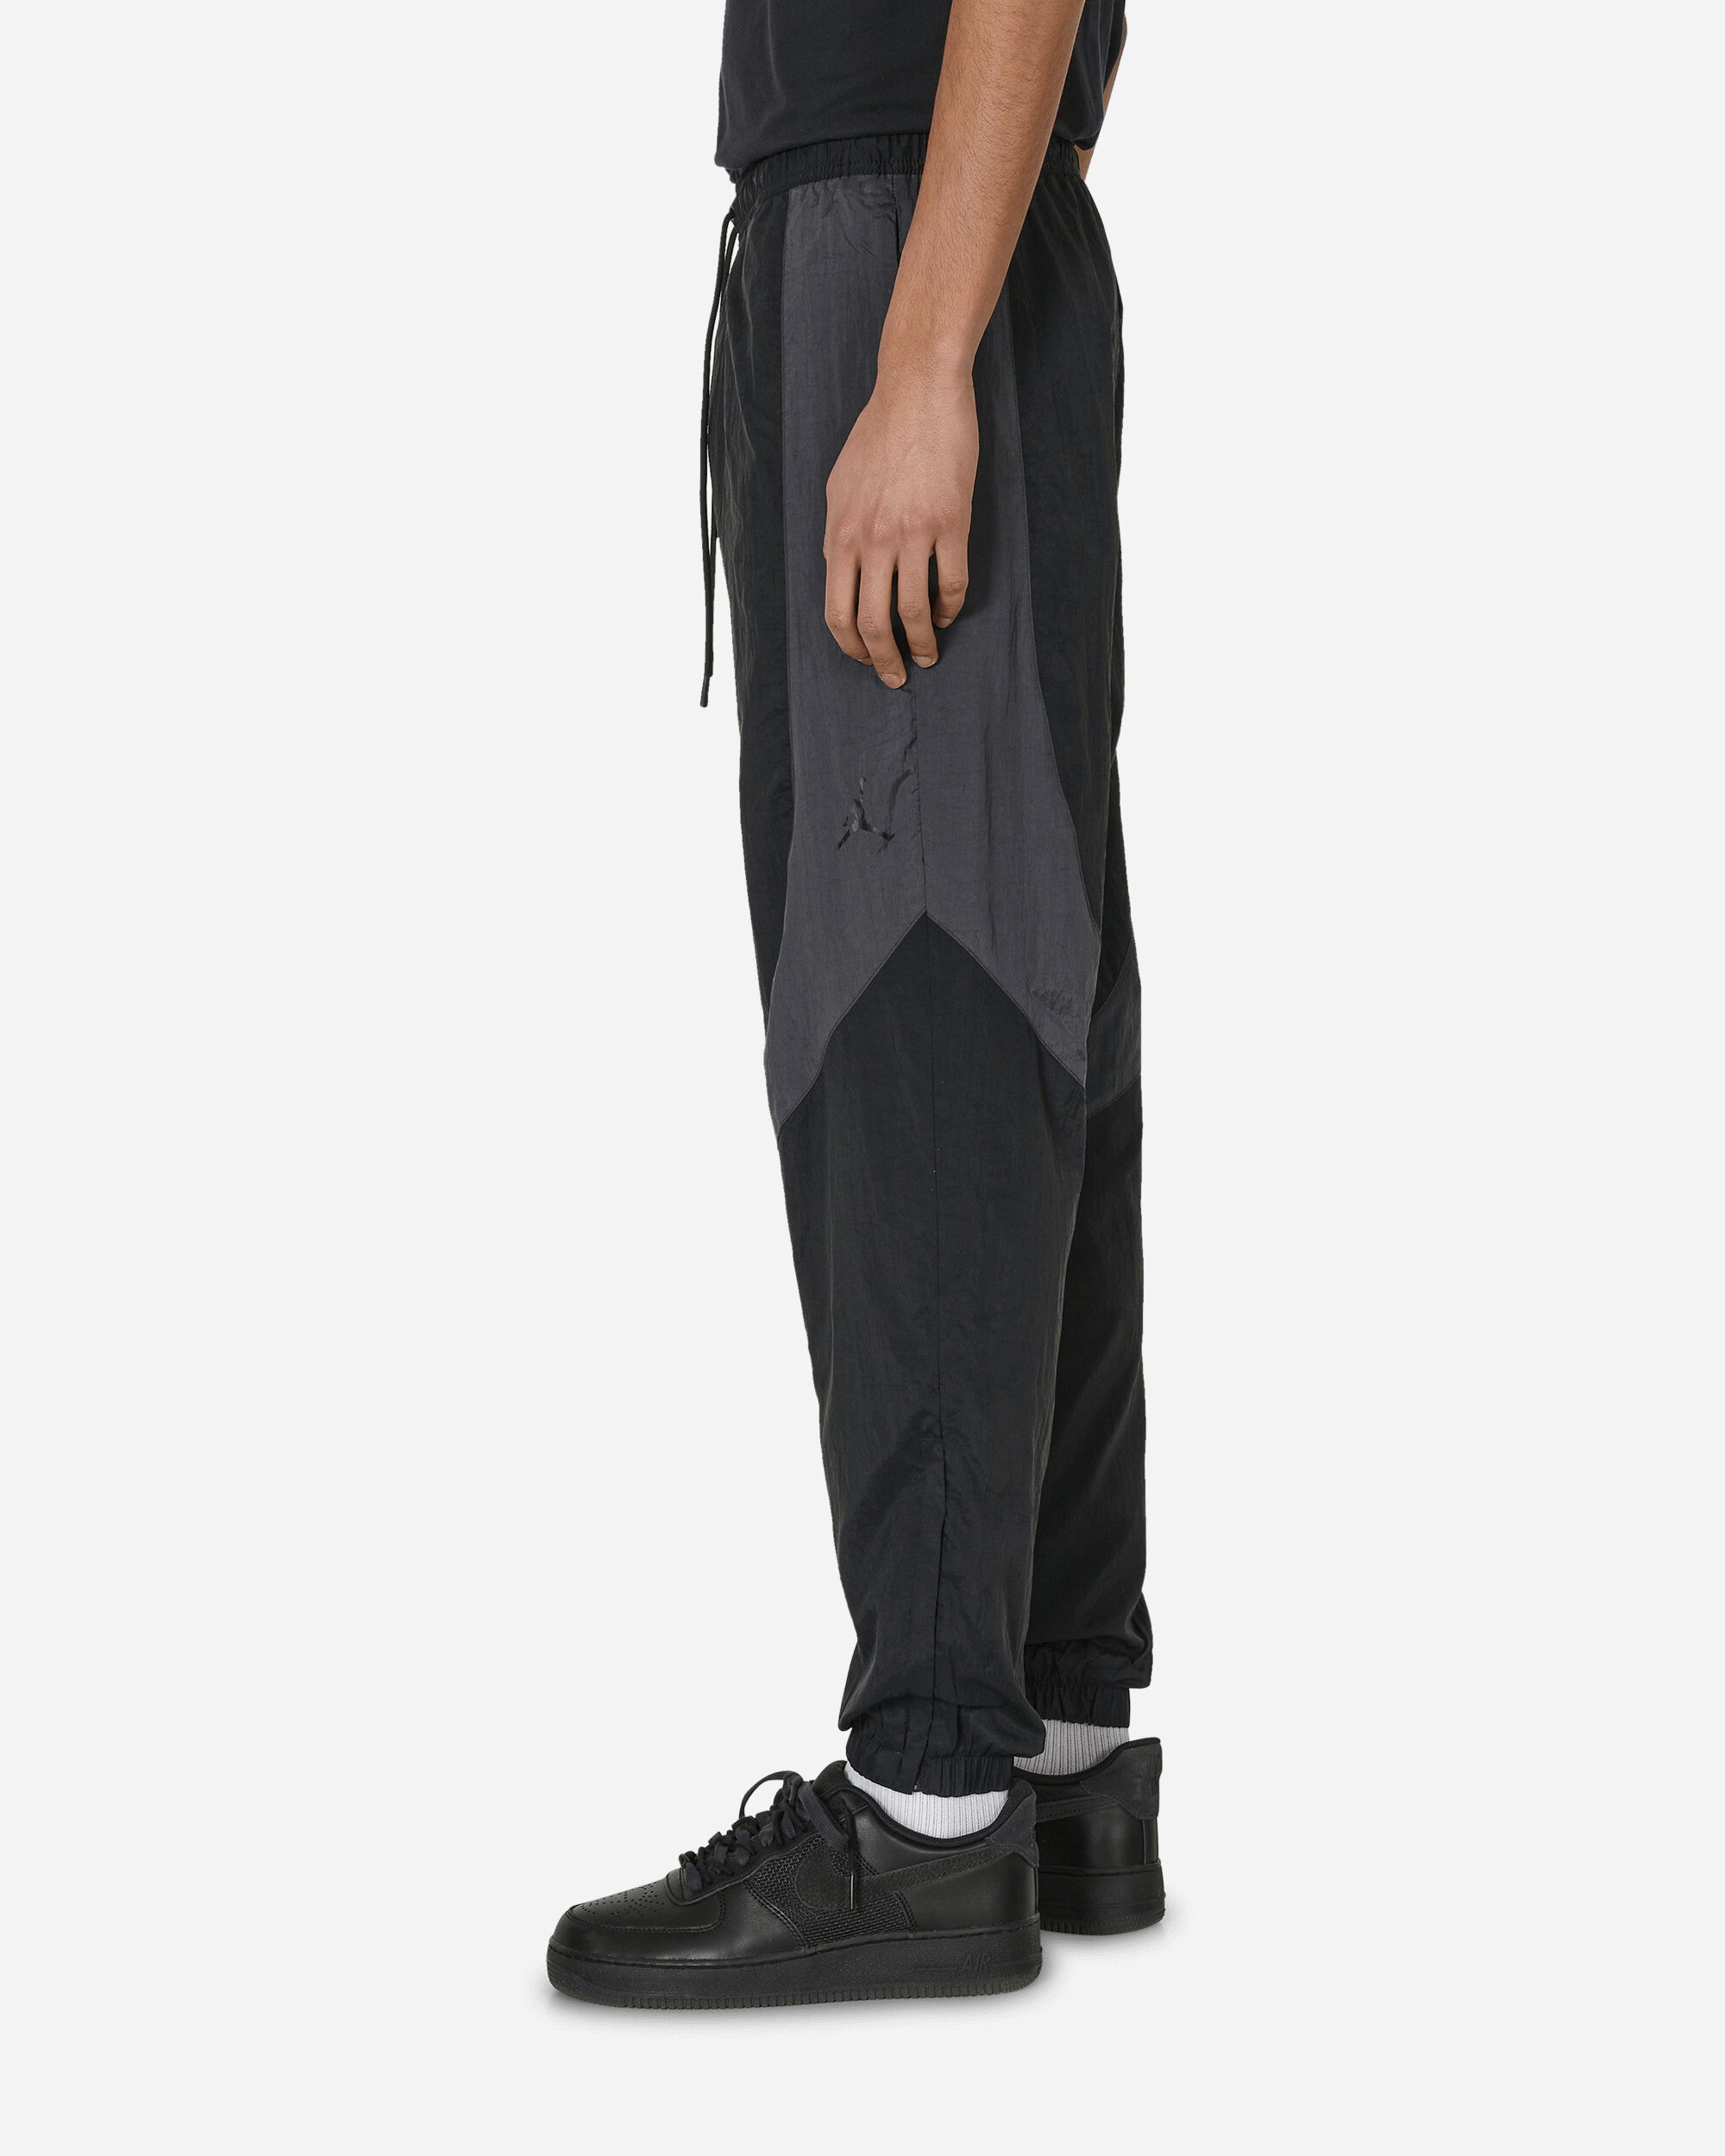 Nike Jordan M J Sprt Jam Warm Up Pant Black/Dark Shadow Pants Sweatpants FN5850-010